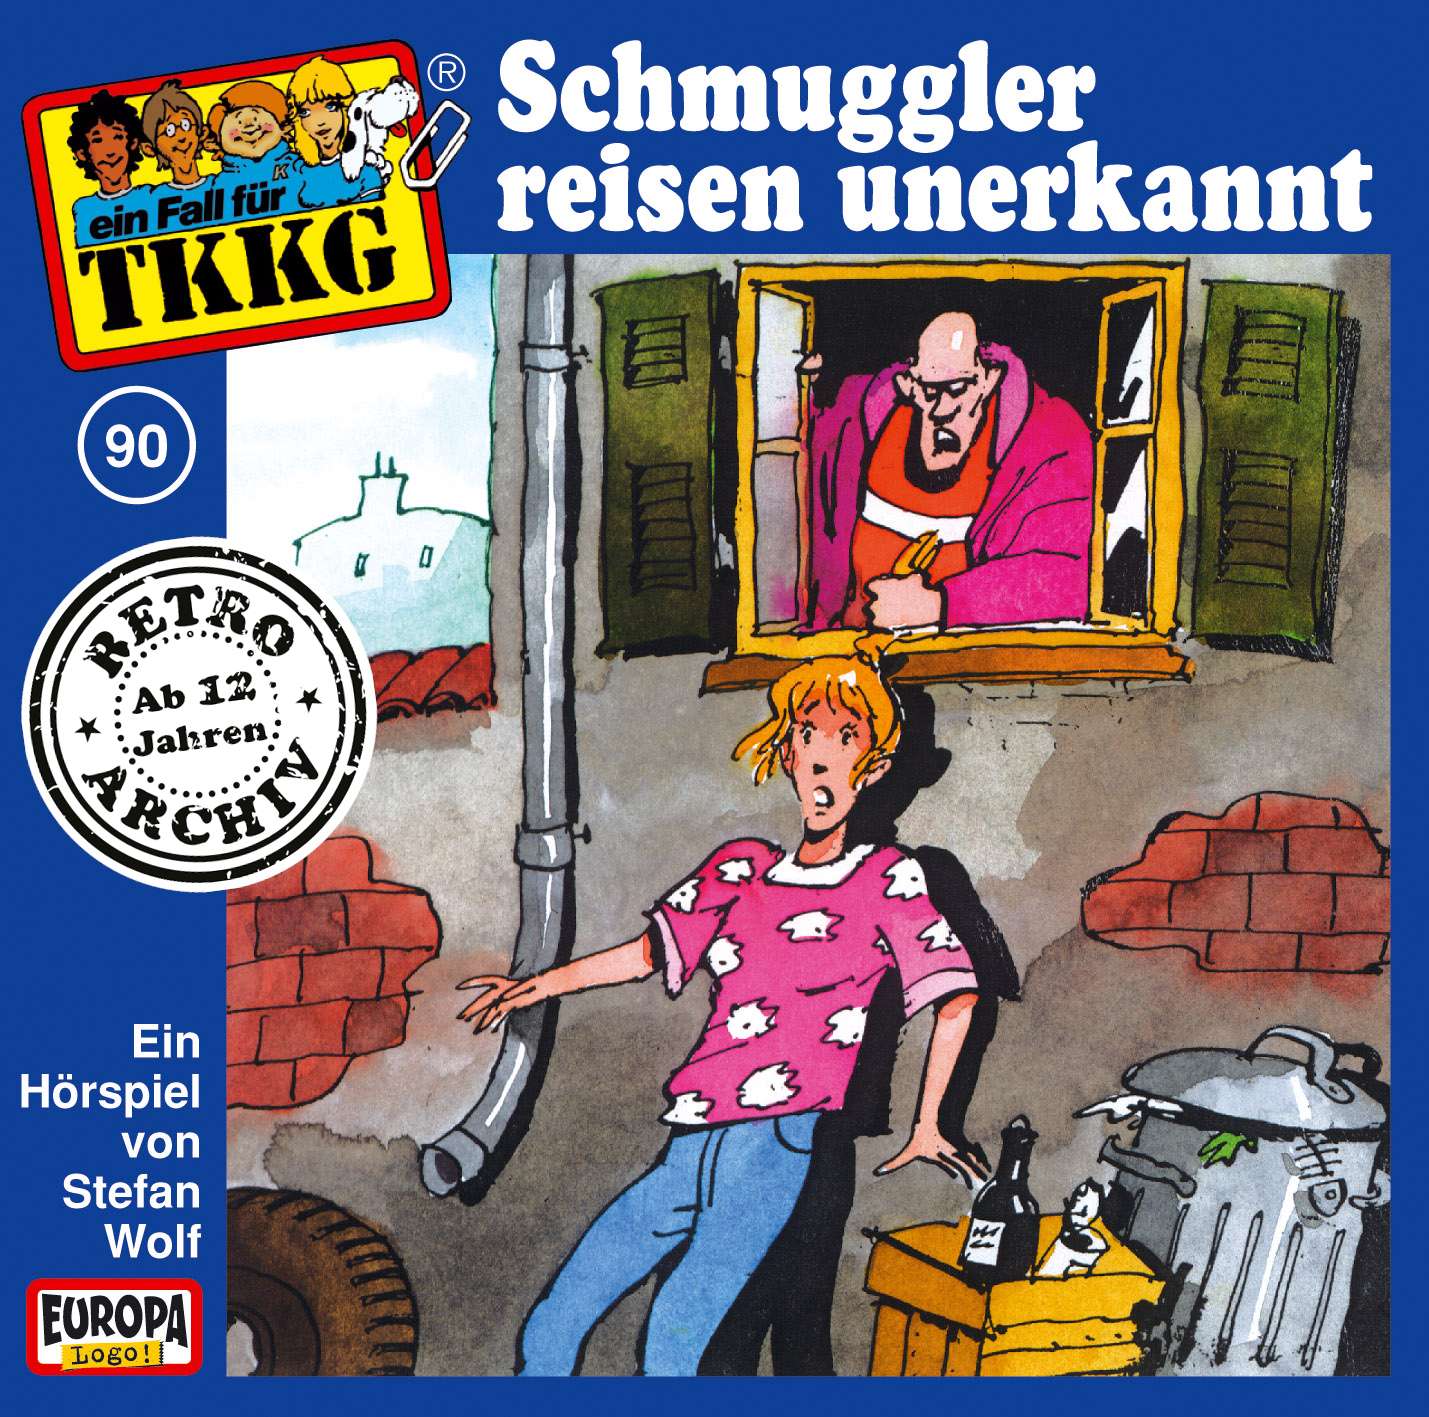 TKKG Retro-Archiv - Schmuggler reisen unerkannt